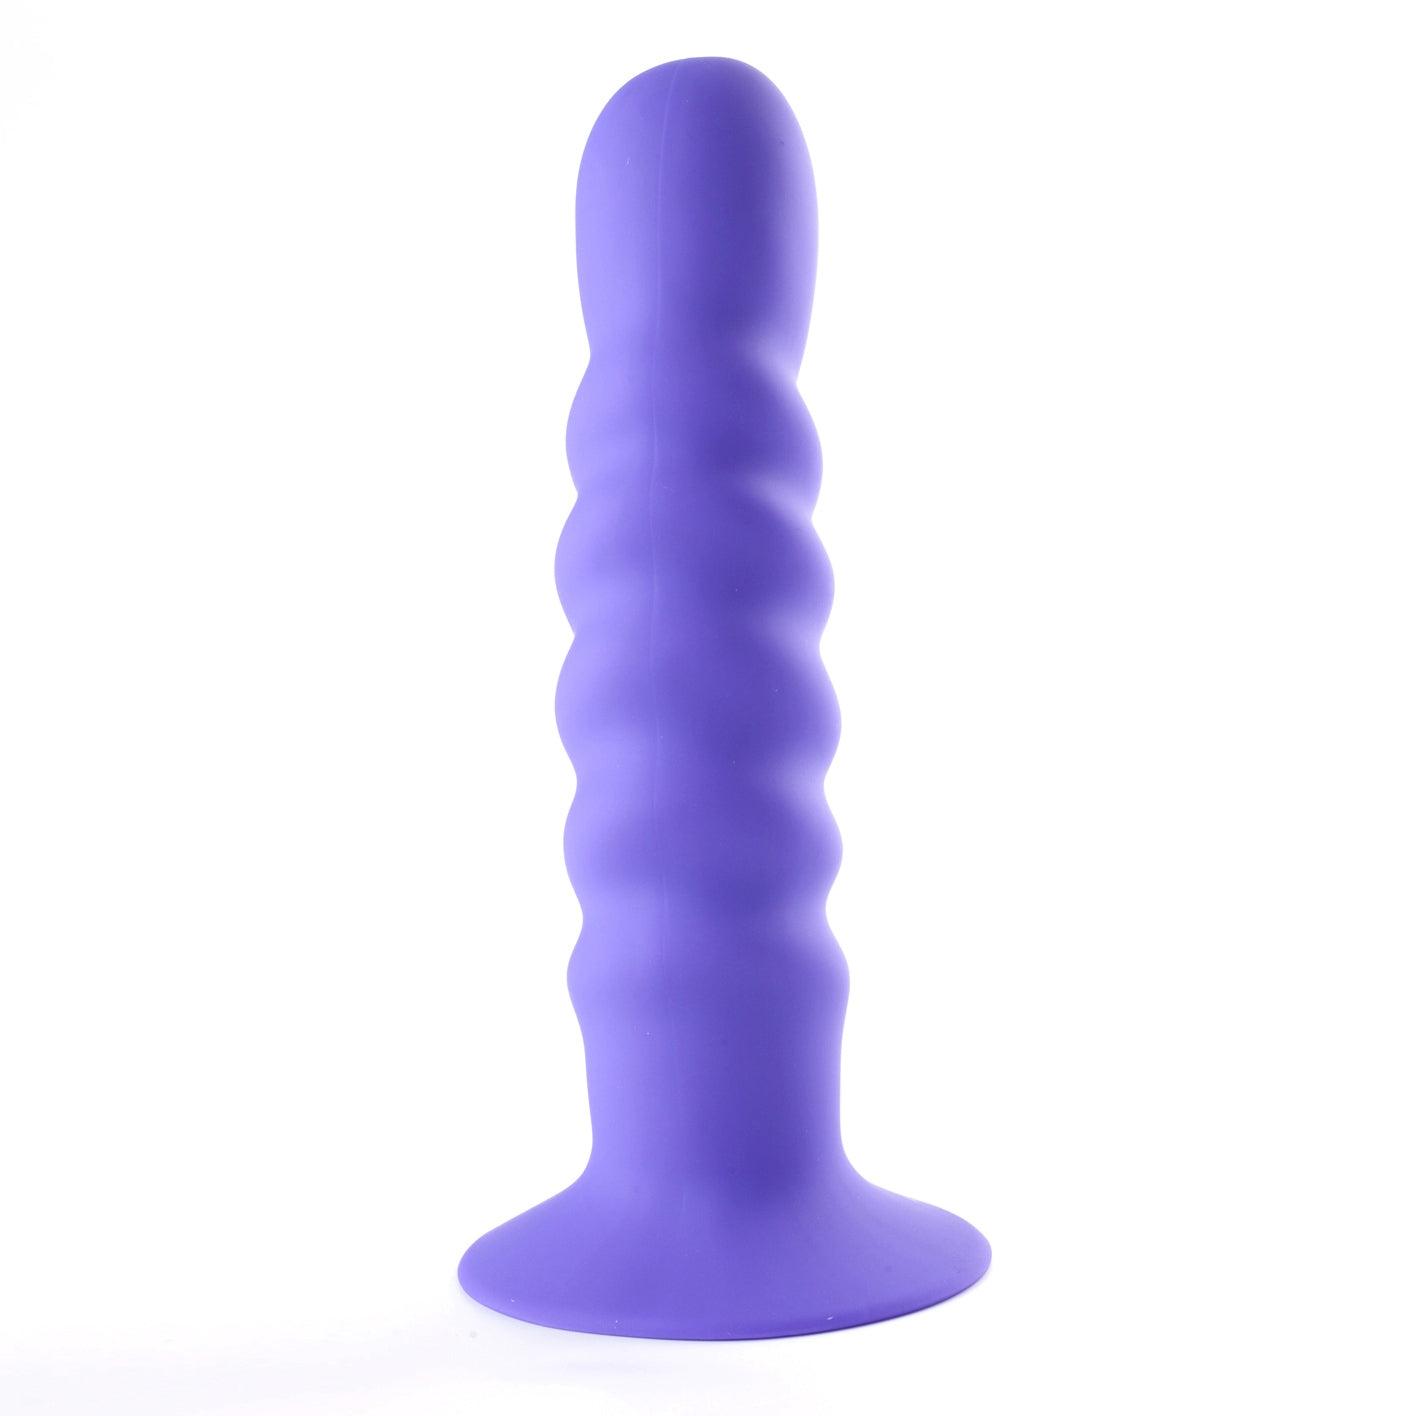 Kendall Silicone Dong Swirled Satin Finish - Neon Purple -